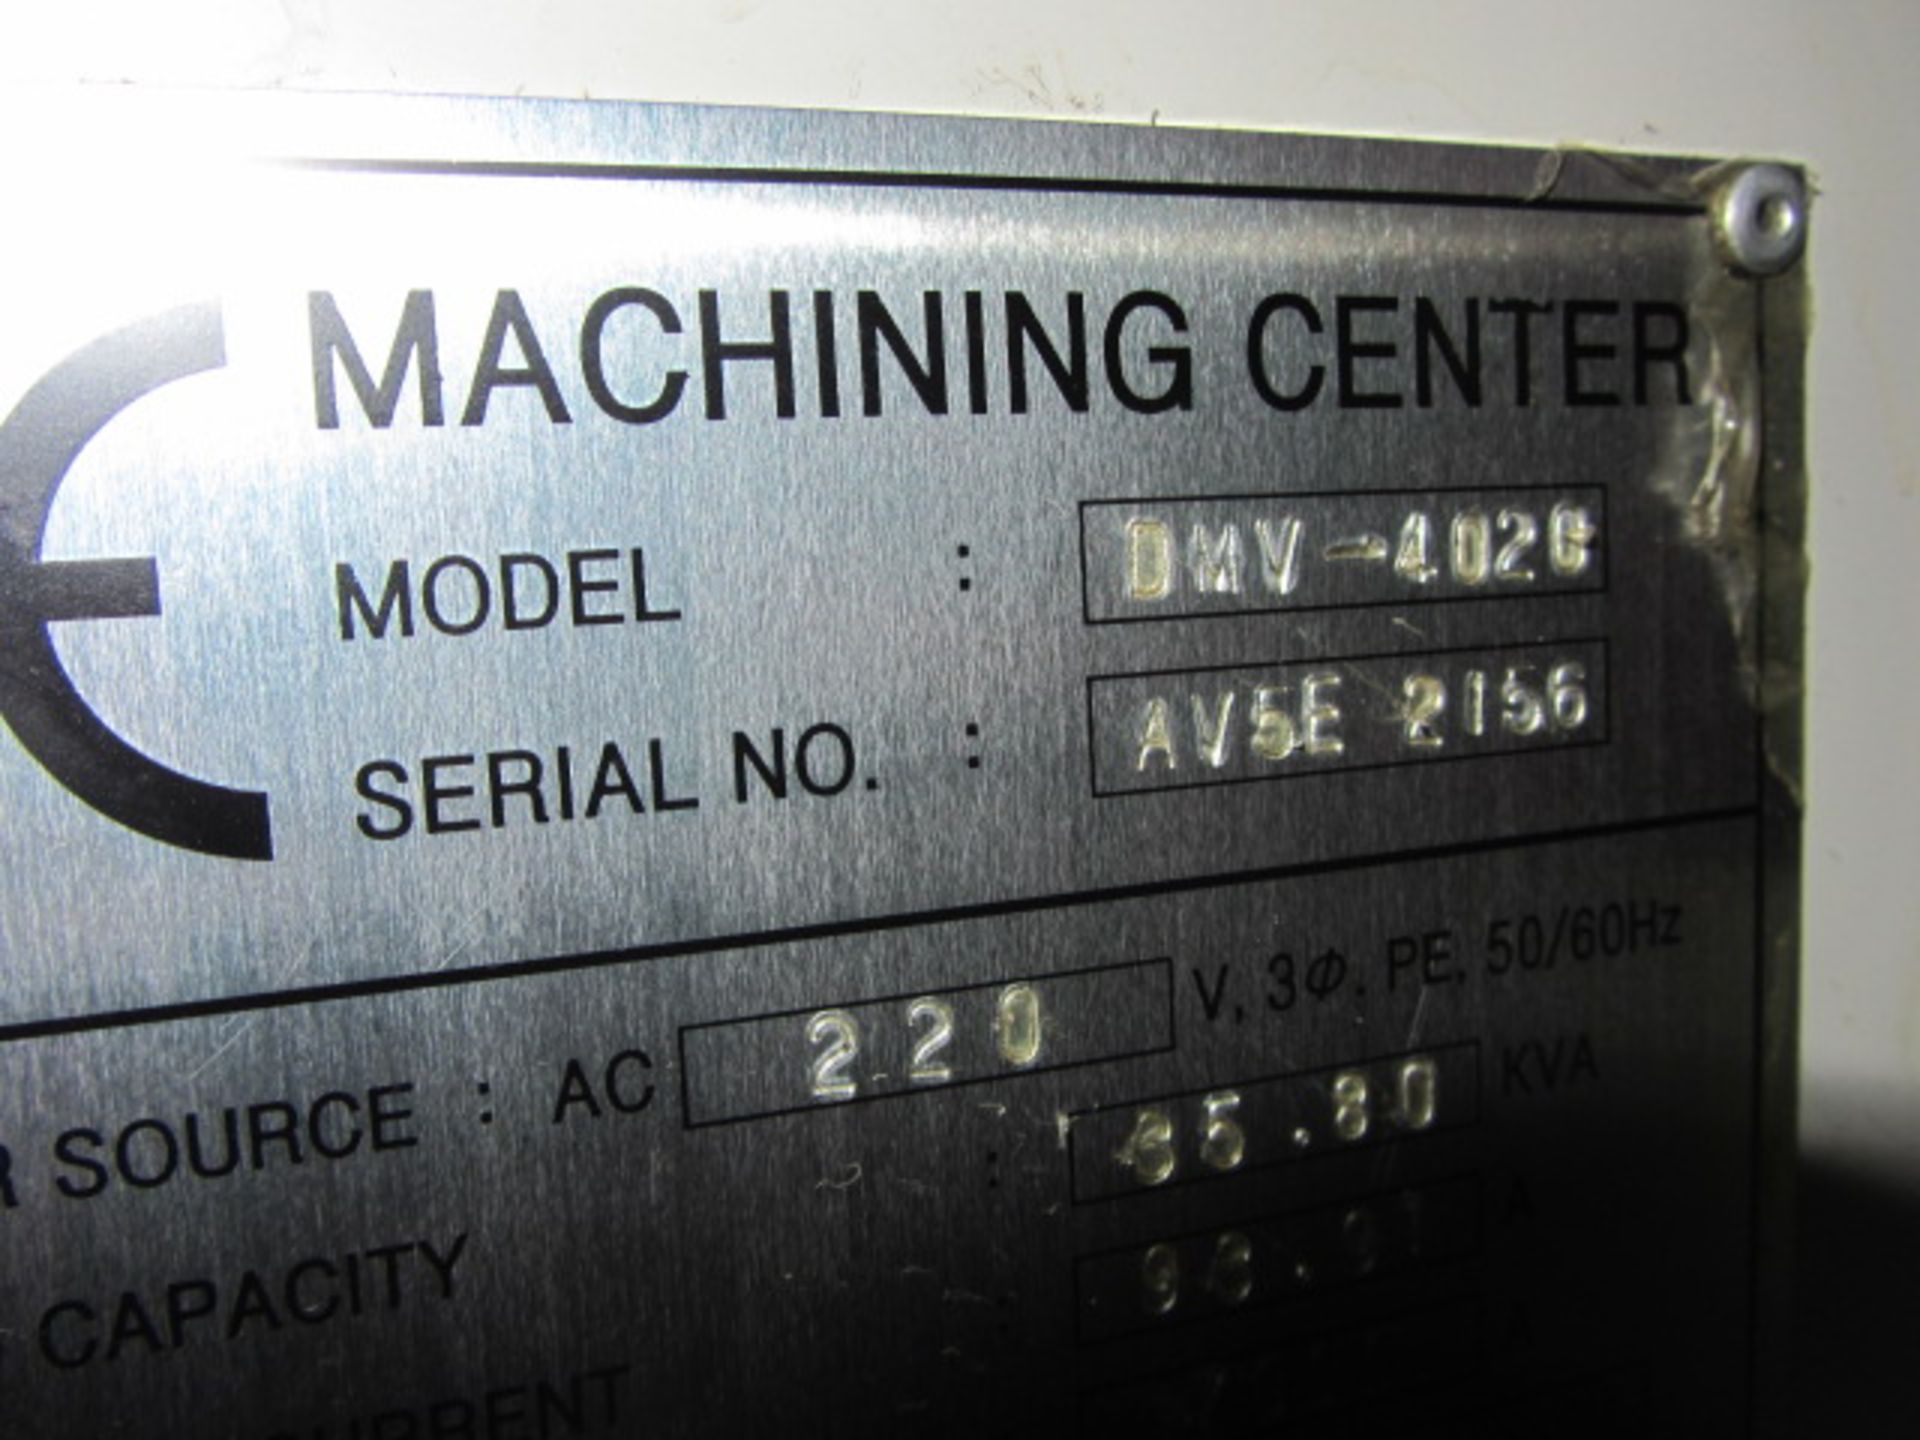 Daewoo / Doosan Diamond DMV4020 CNC Vertical Machining Center with 47'' x 19'' Table, #40 Taper - Image 7 of 7